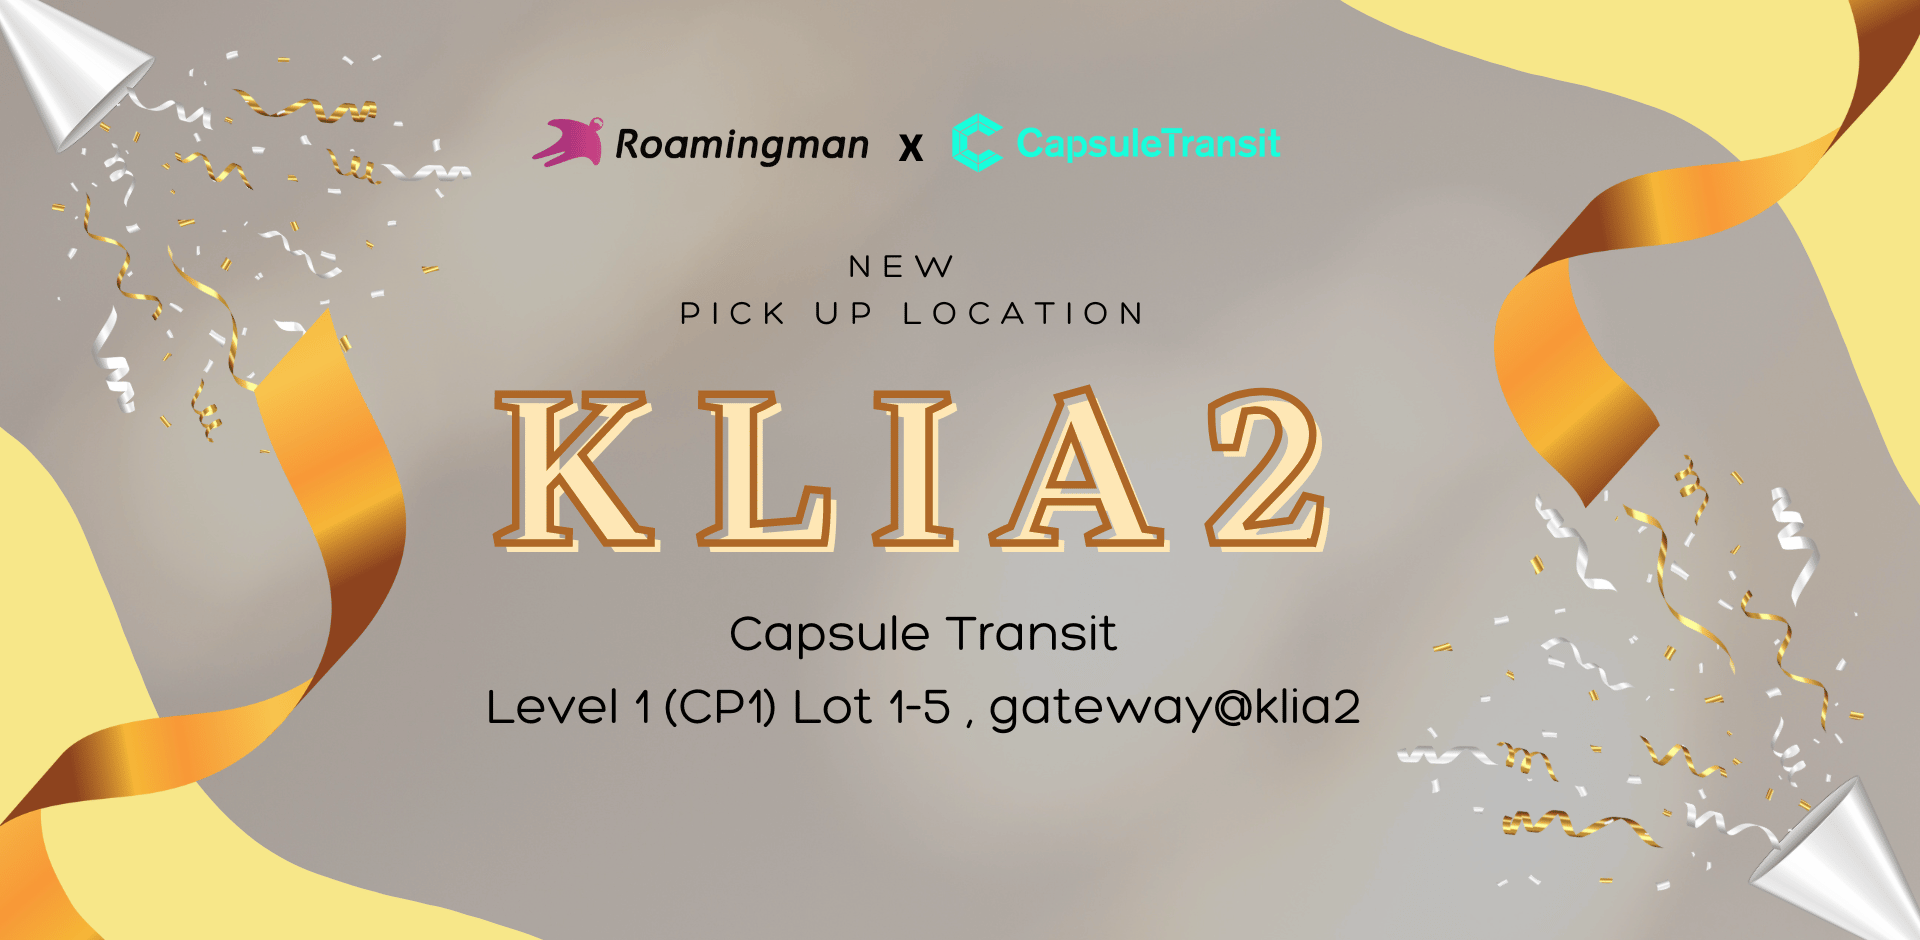 KLIA 2 Pick Up Location